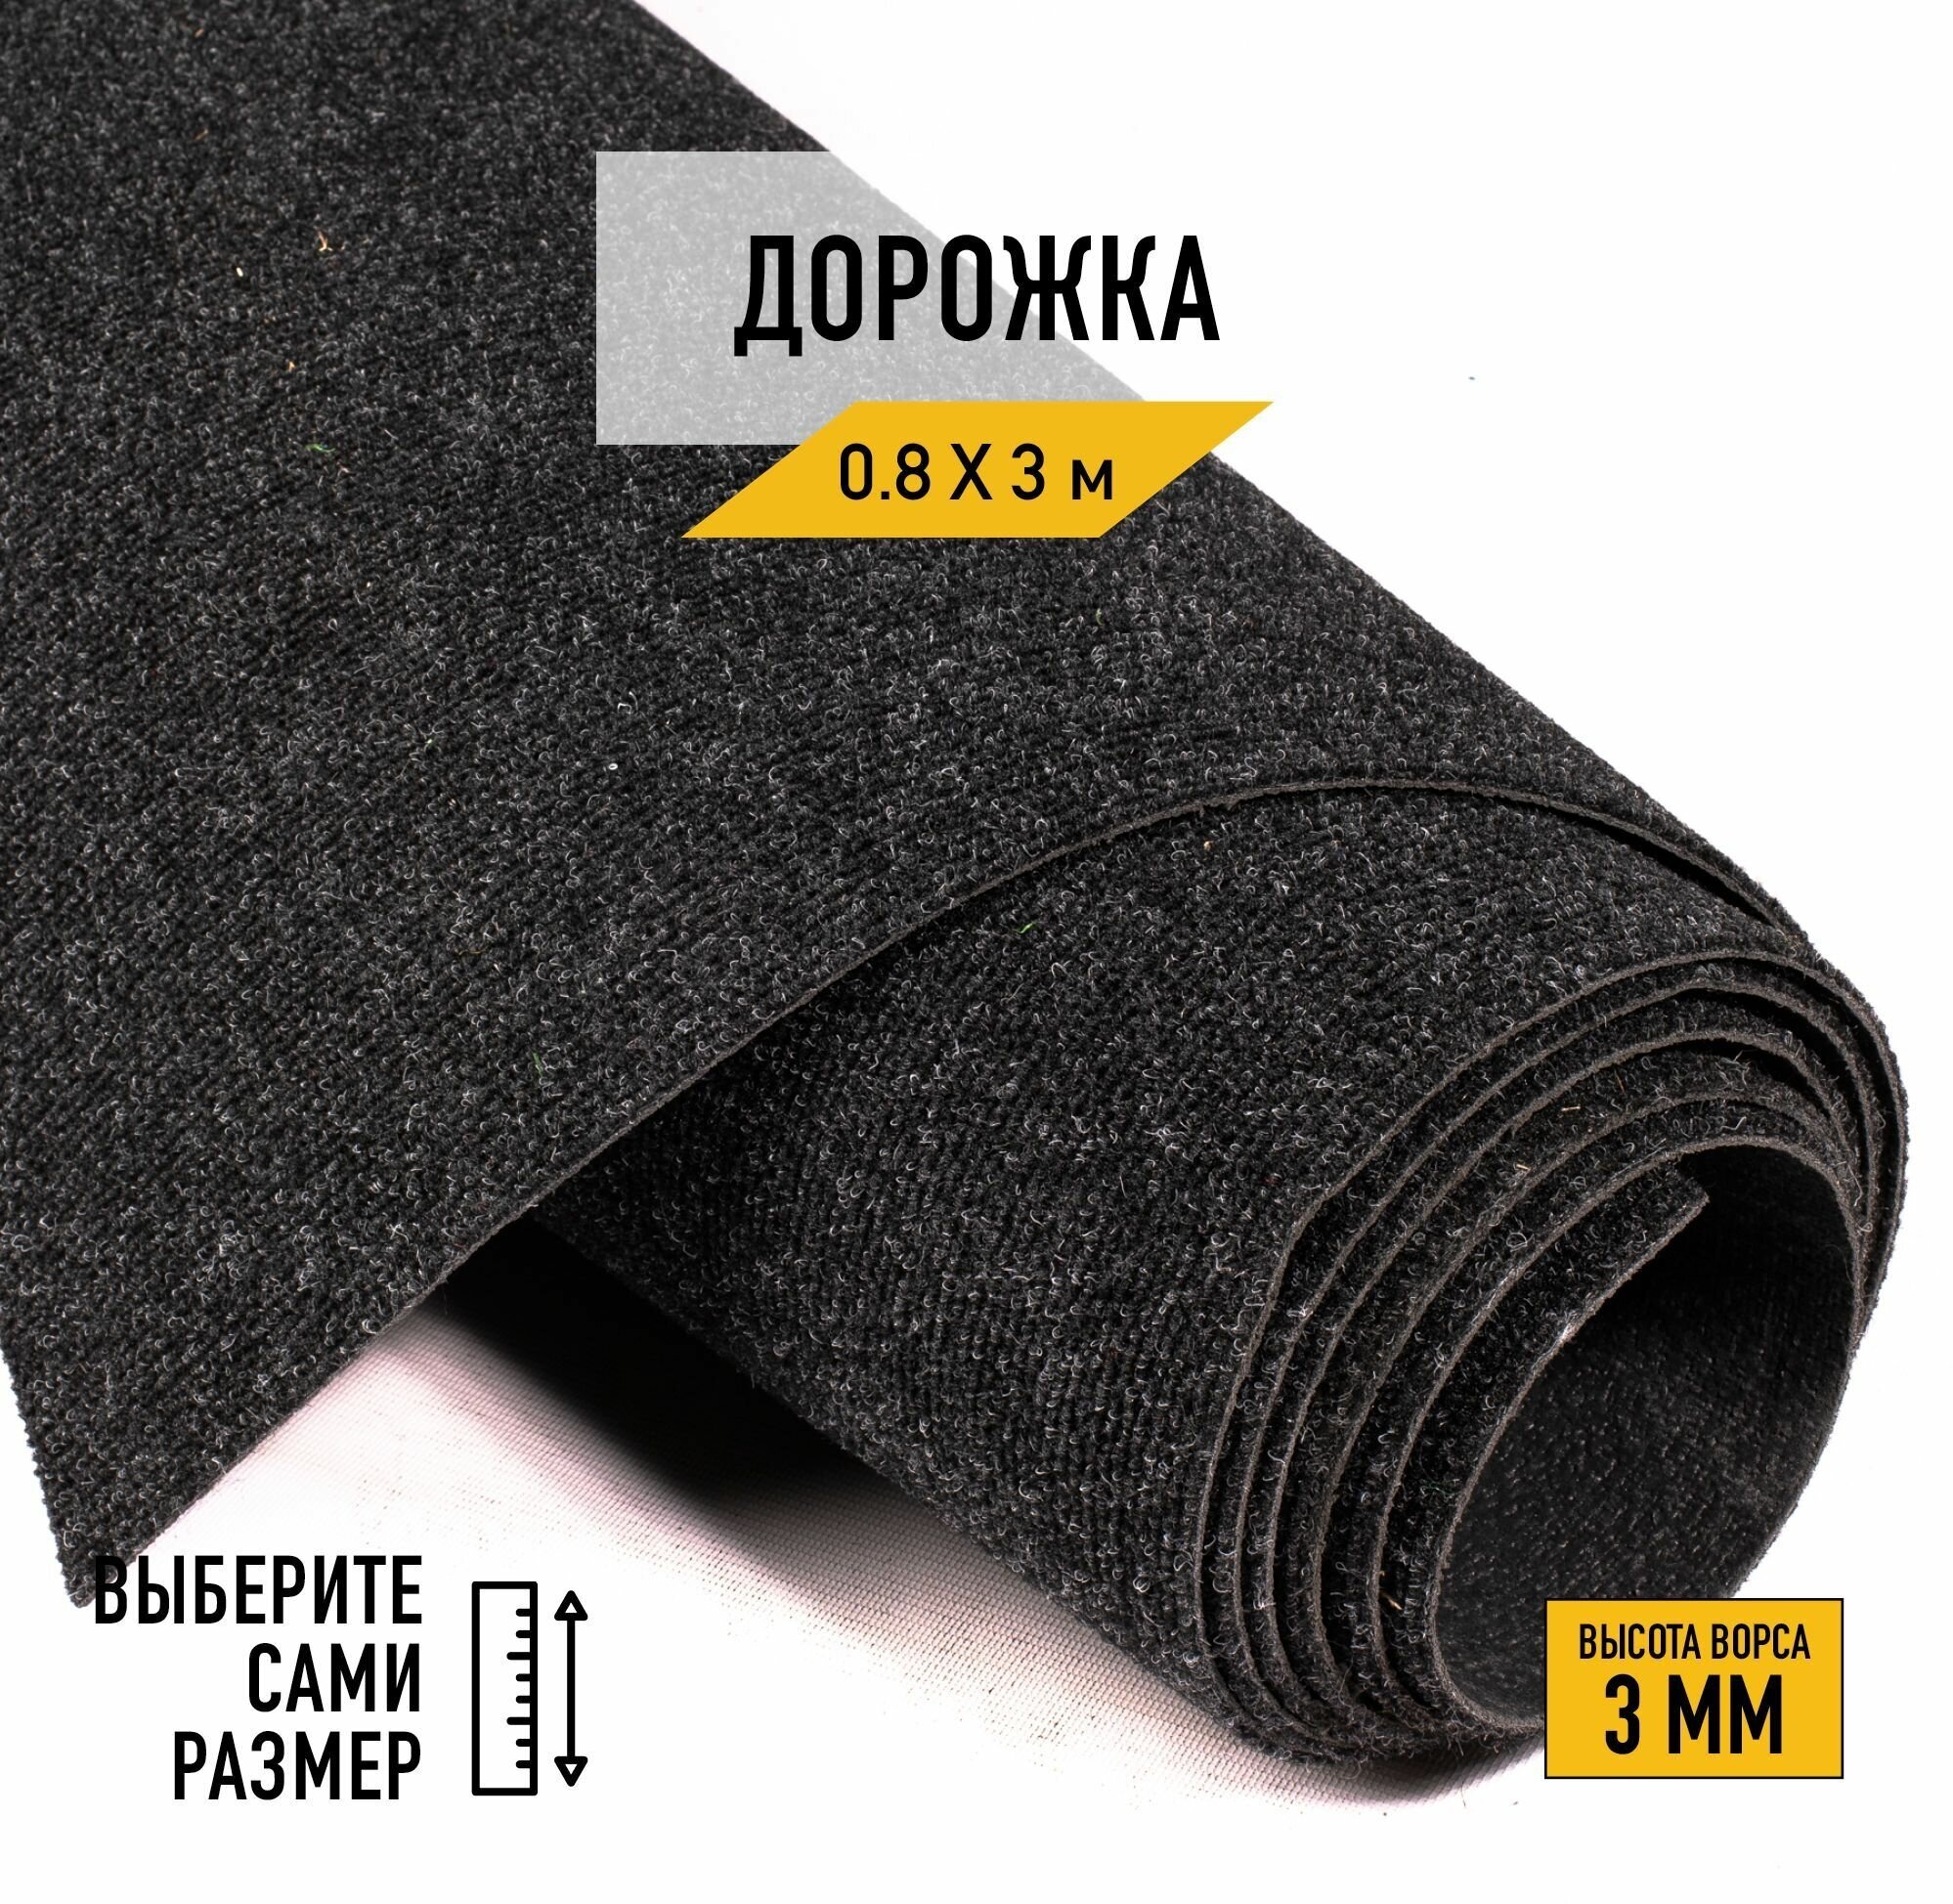 Дорожка ковровая на пол 0,8х3 м LEVMA DE 78 для офиса и дома. 4809822-0,8х3